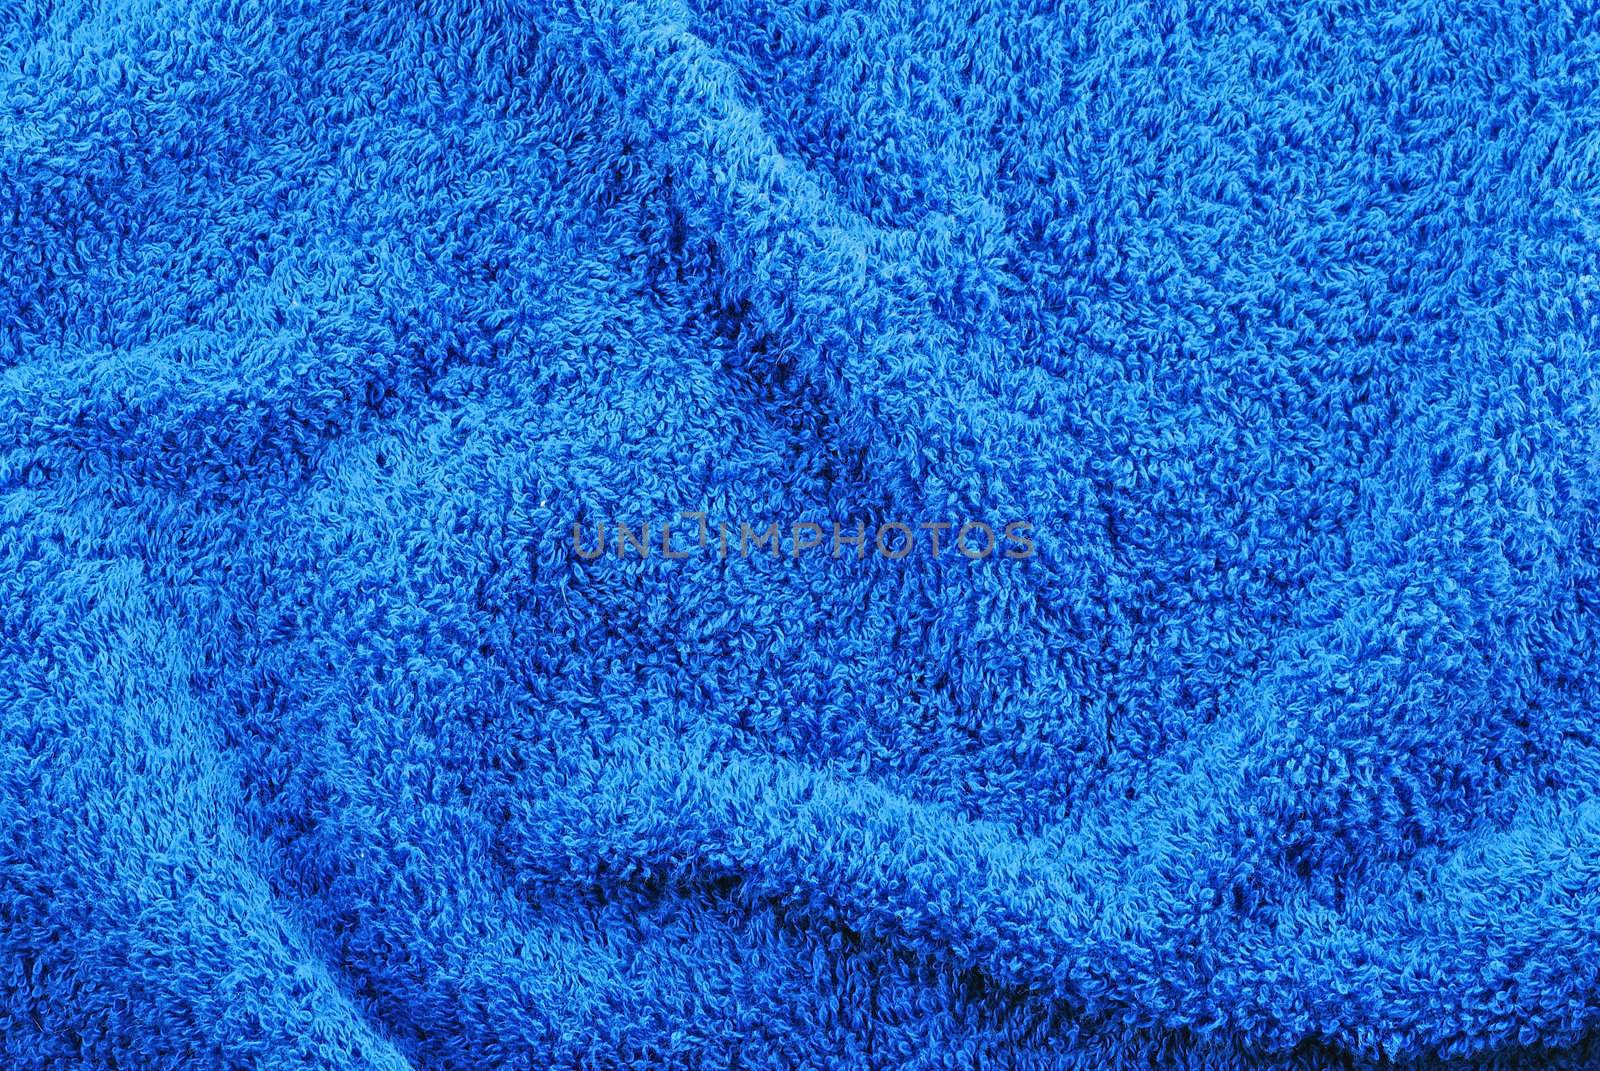 blue texture and details, terry cloth bath towel textile background